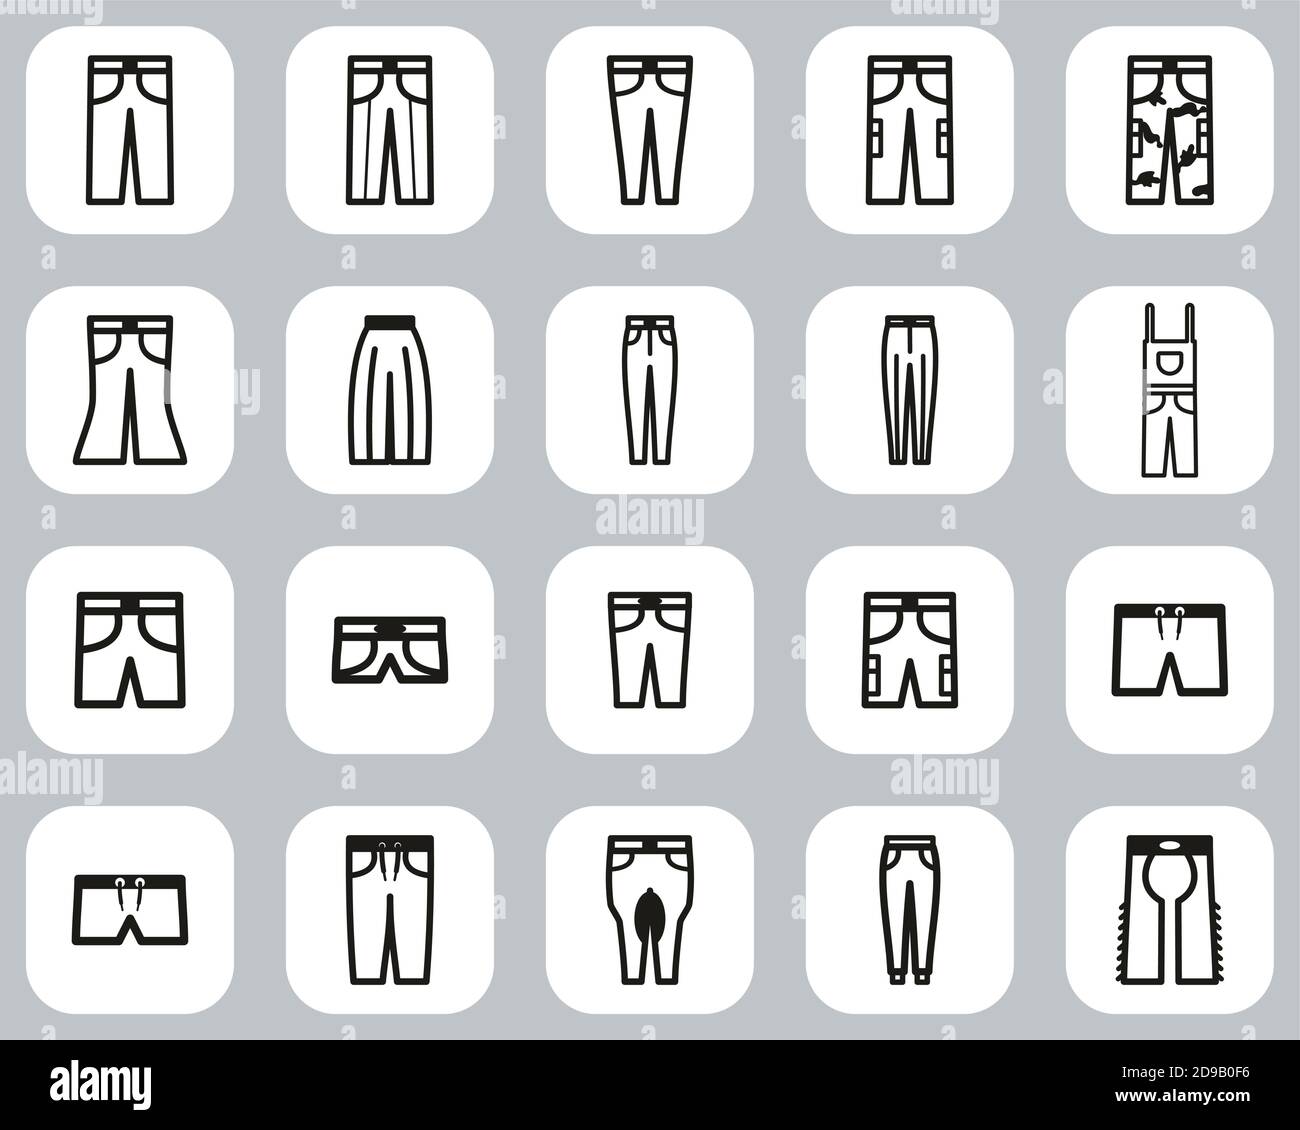 Pants Long & Short Icons Black & White Flat Design Set Big Stock Vector